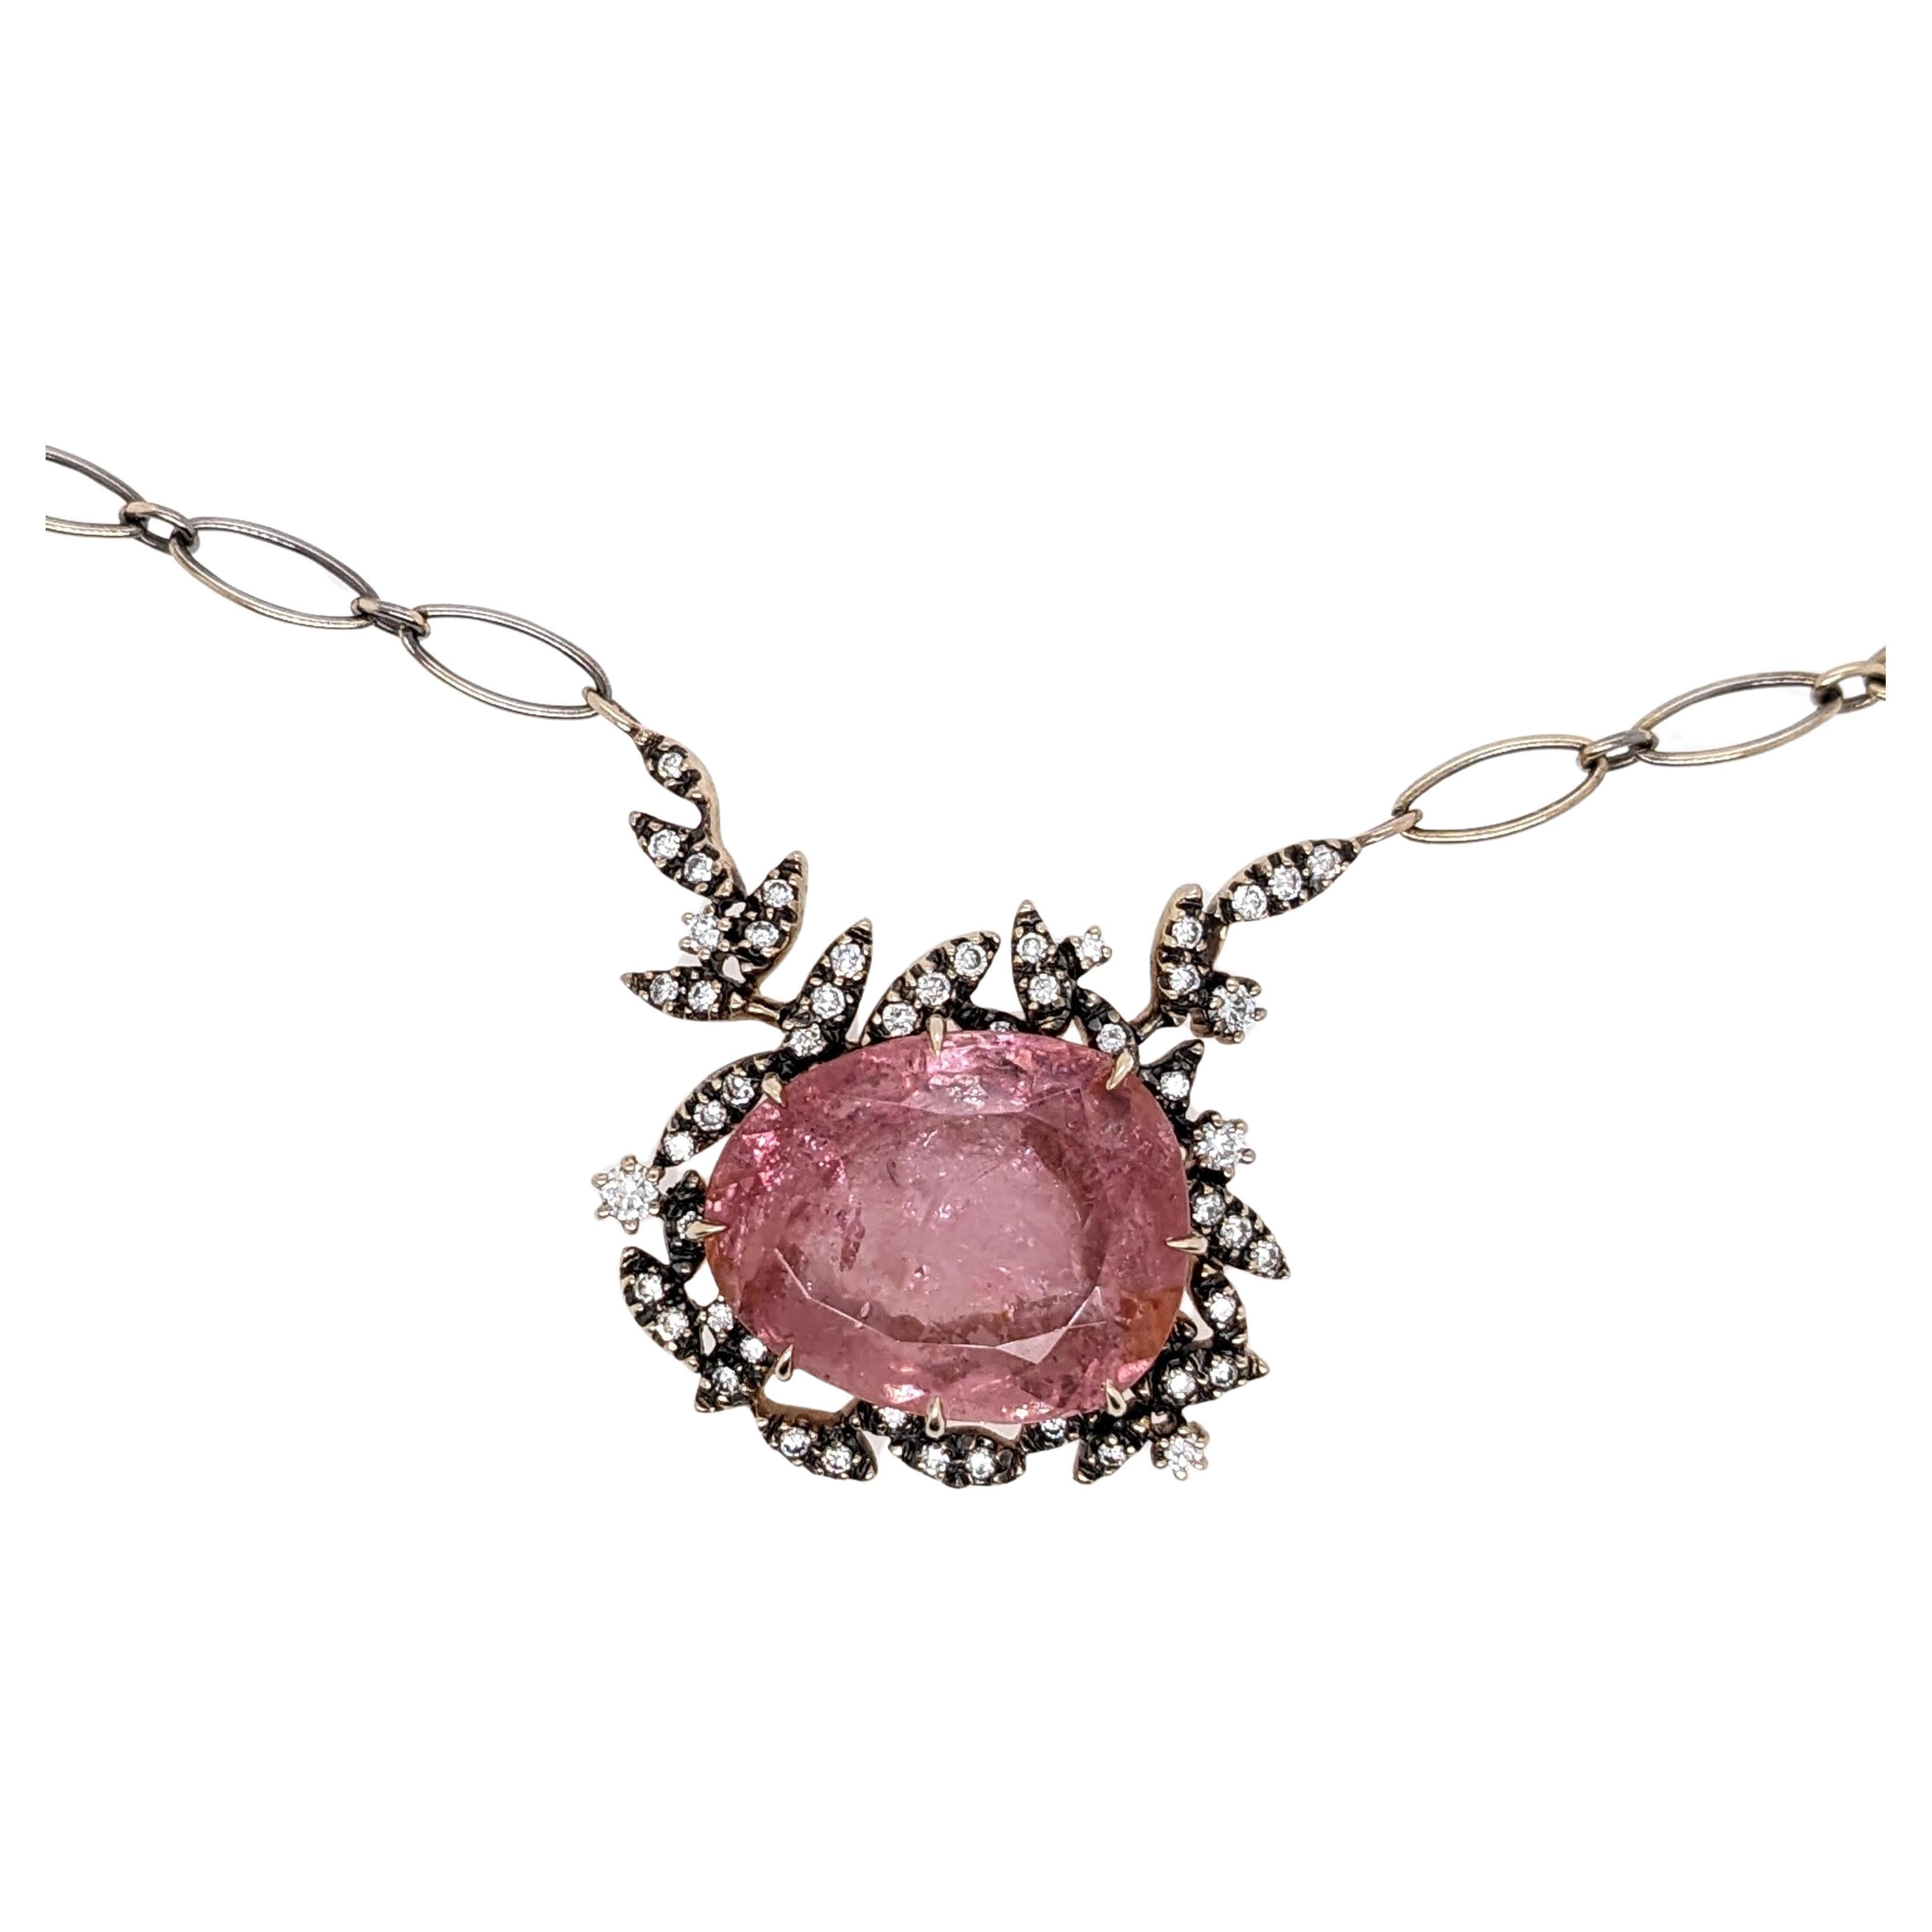 8ct Unique Pink Tourmaline Pendant Necklace w Natural Diamonds in Solid 18K Gold